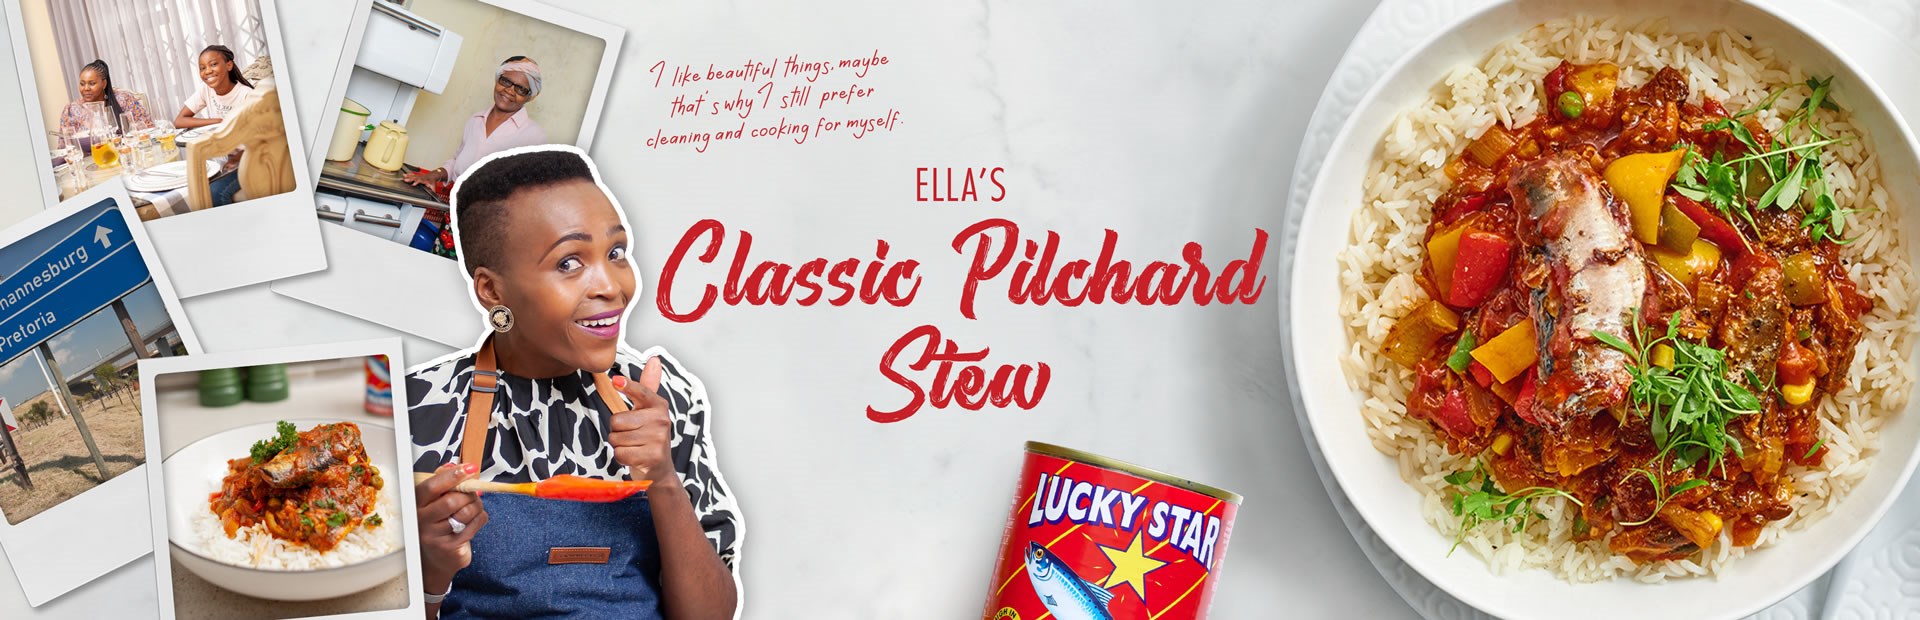 ELLA’S Classic Pilchard Stew